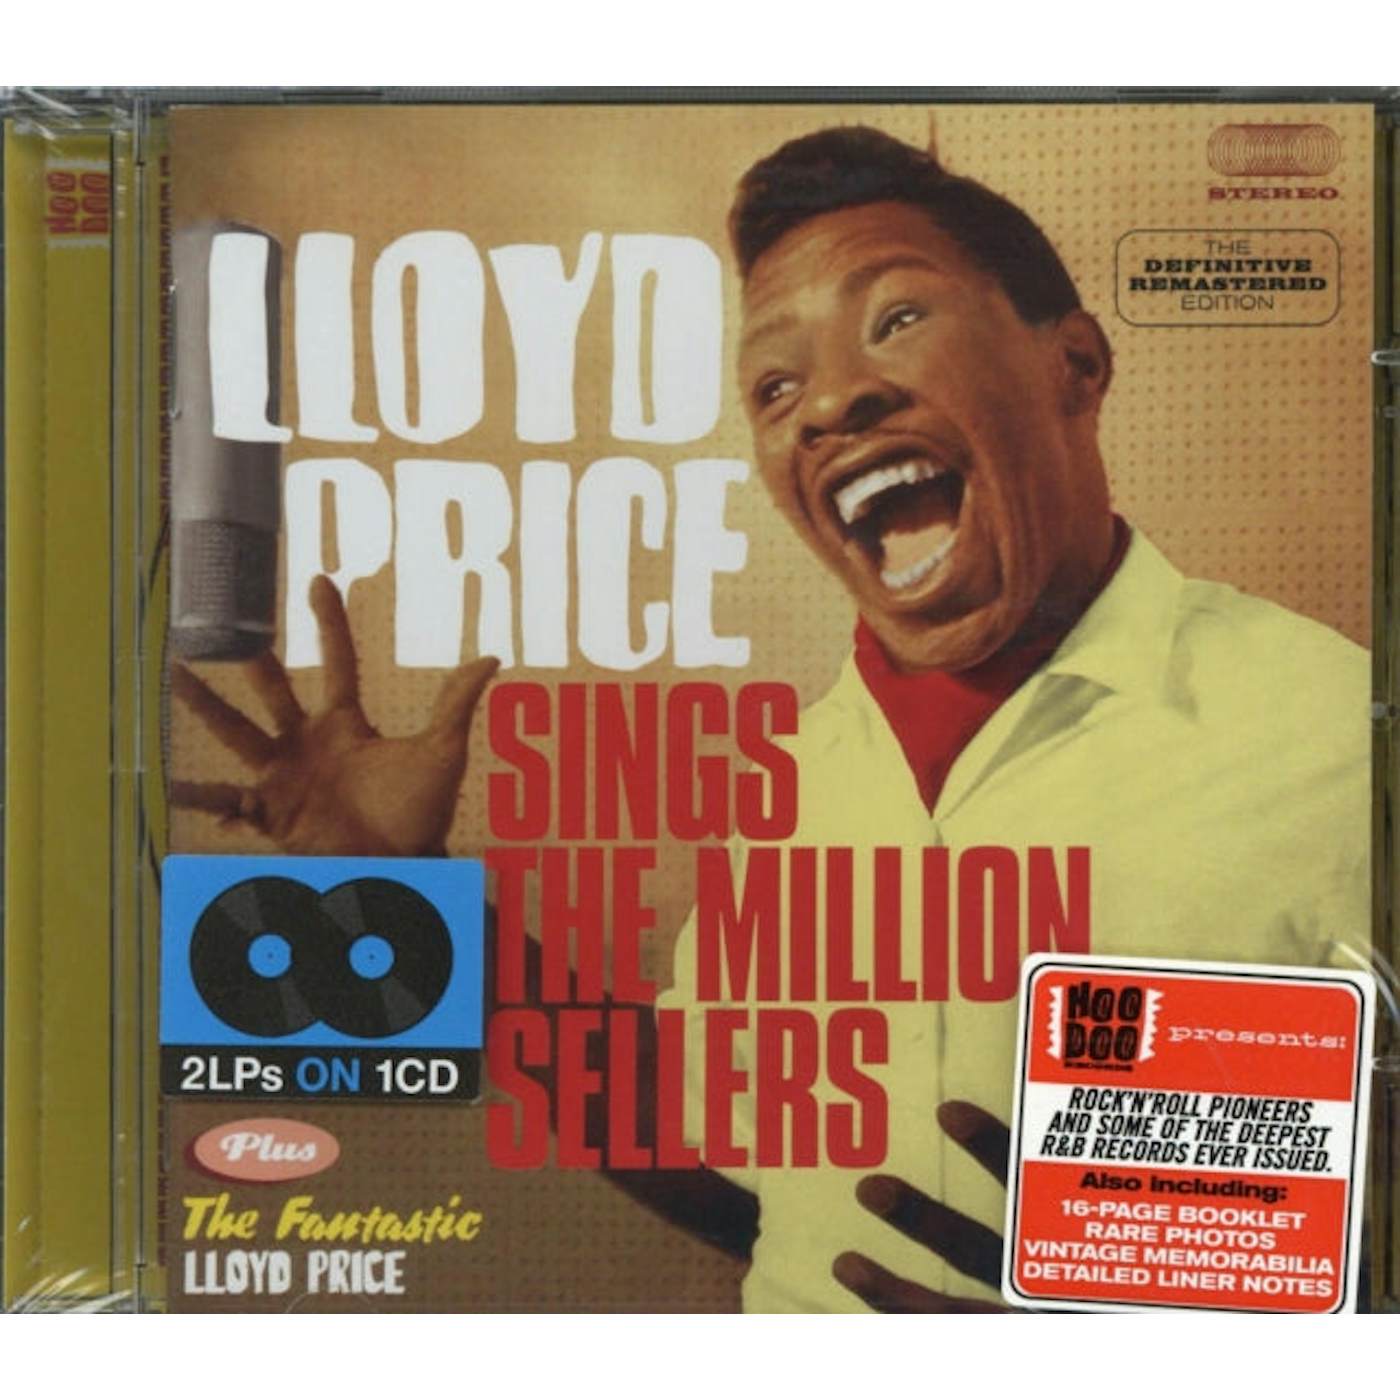 Lloyd Price CD - The Fantstic Lloyd Price / Sings The Million Sellers